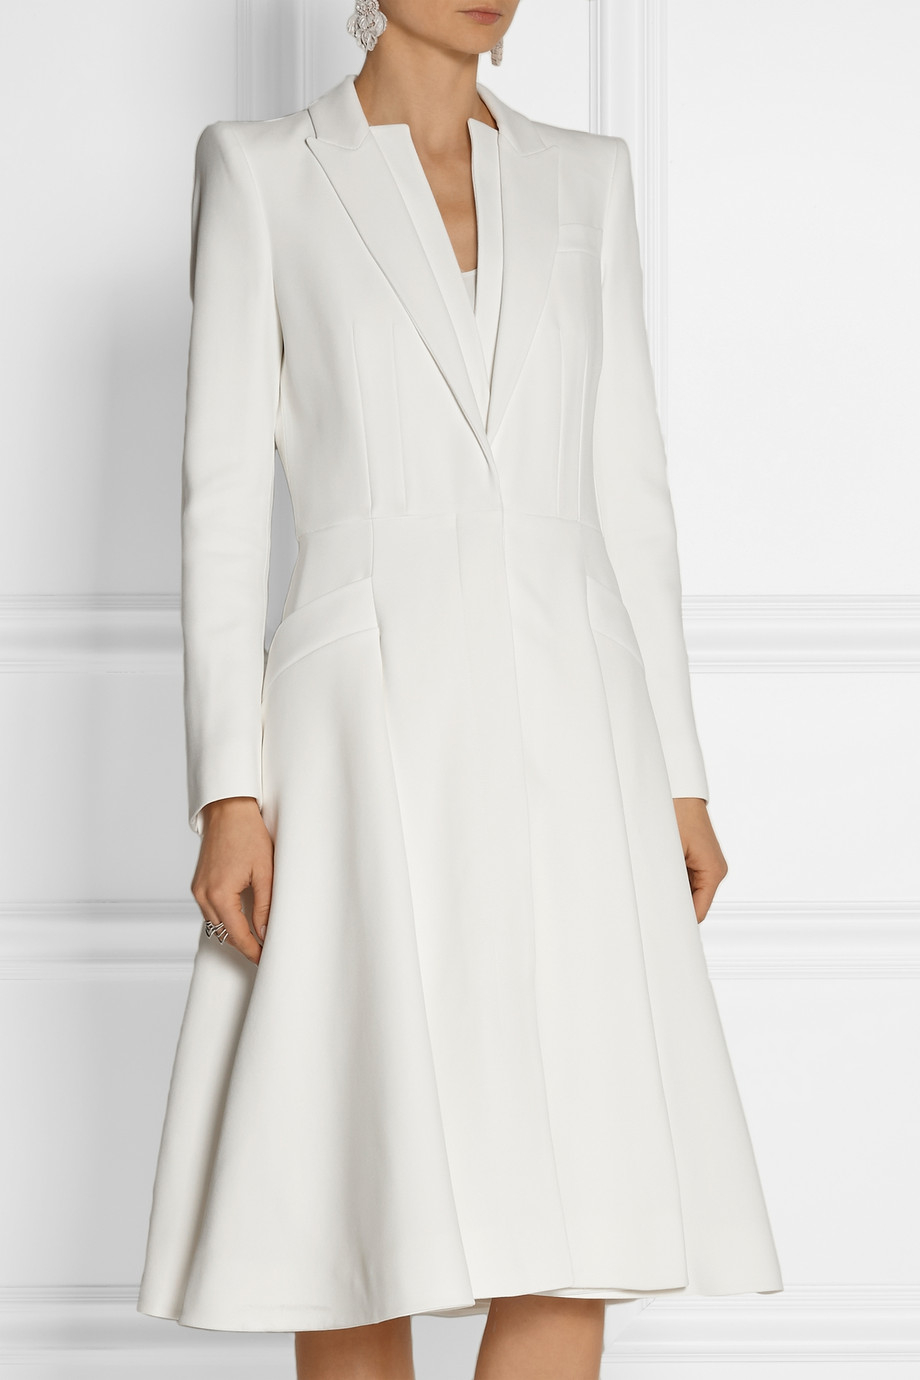 Alexander McQueen A-Line Crepe Coat in White | Lyst